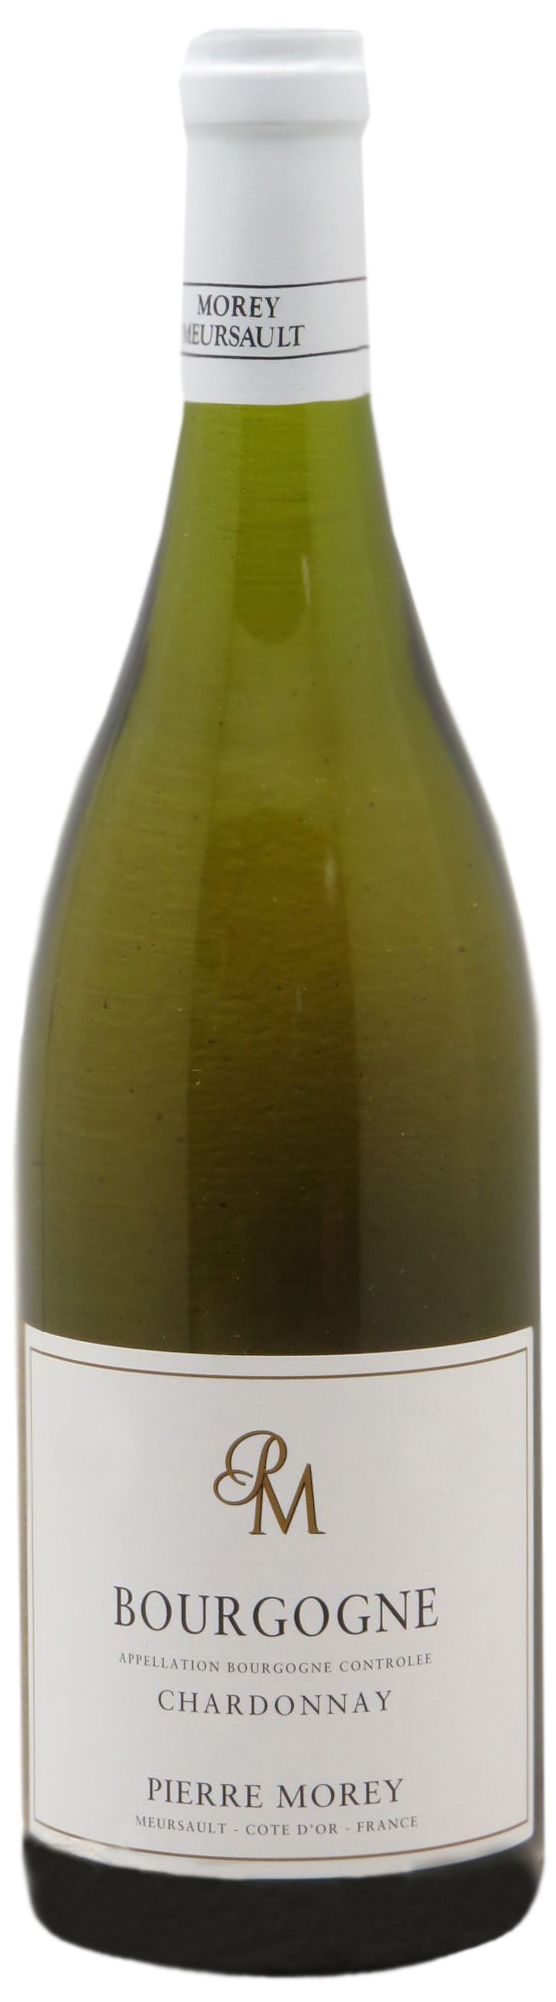 Domaine Pierre Morey & Morey-Blanc, Bourgogne Chardonnay, 2012